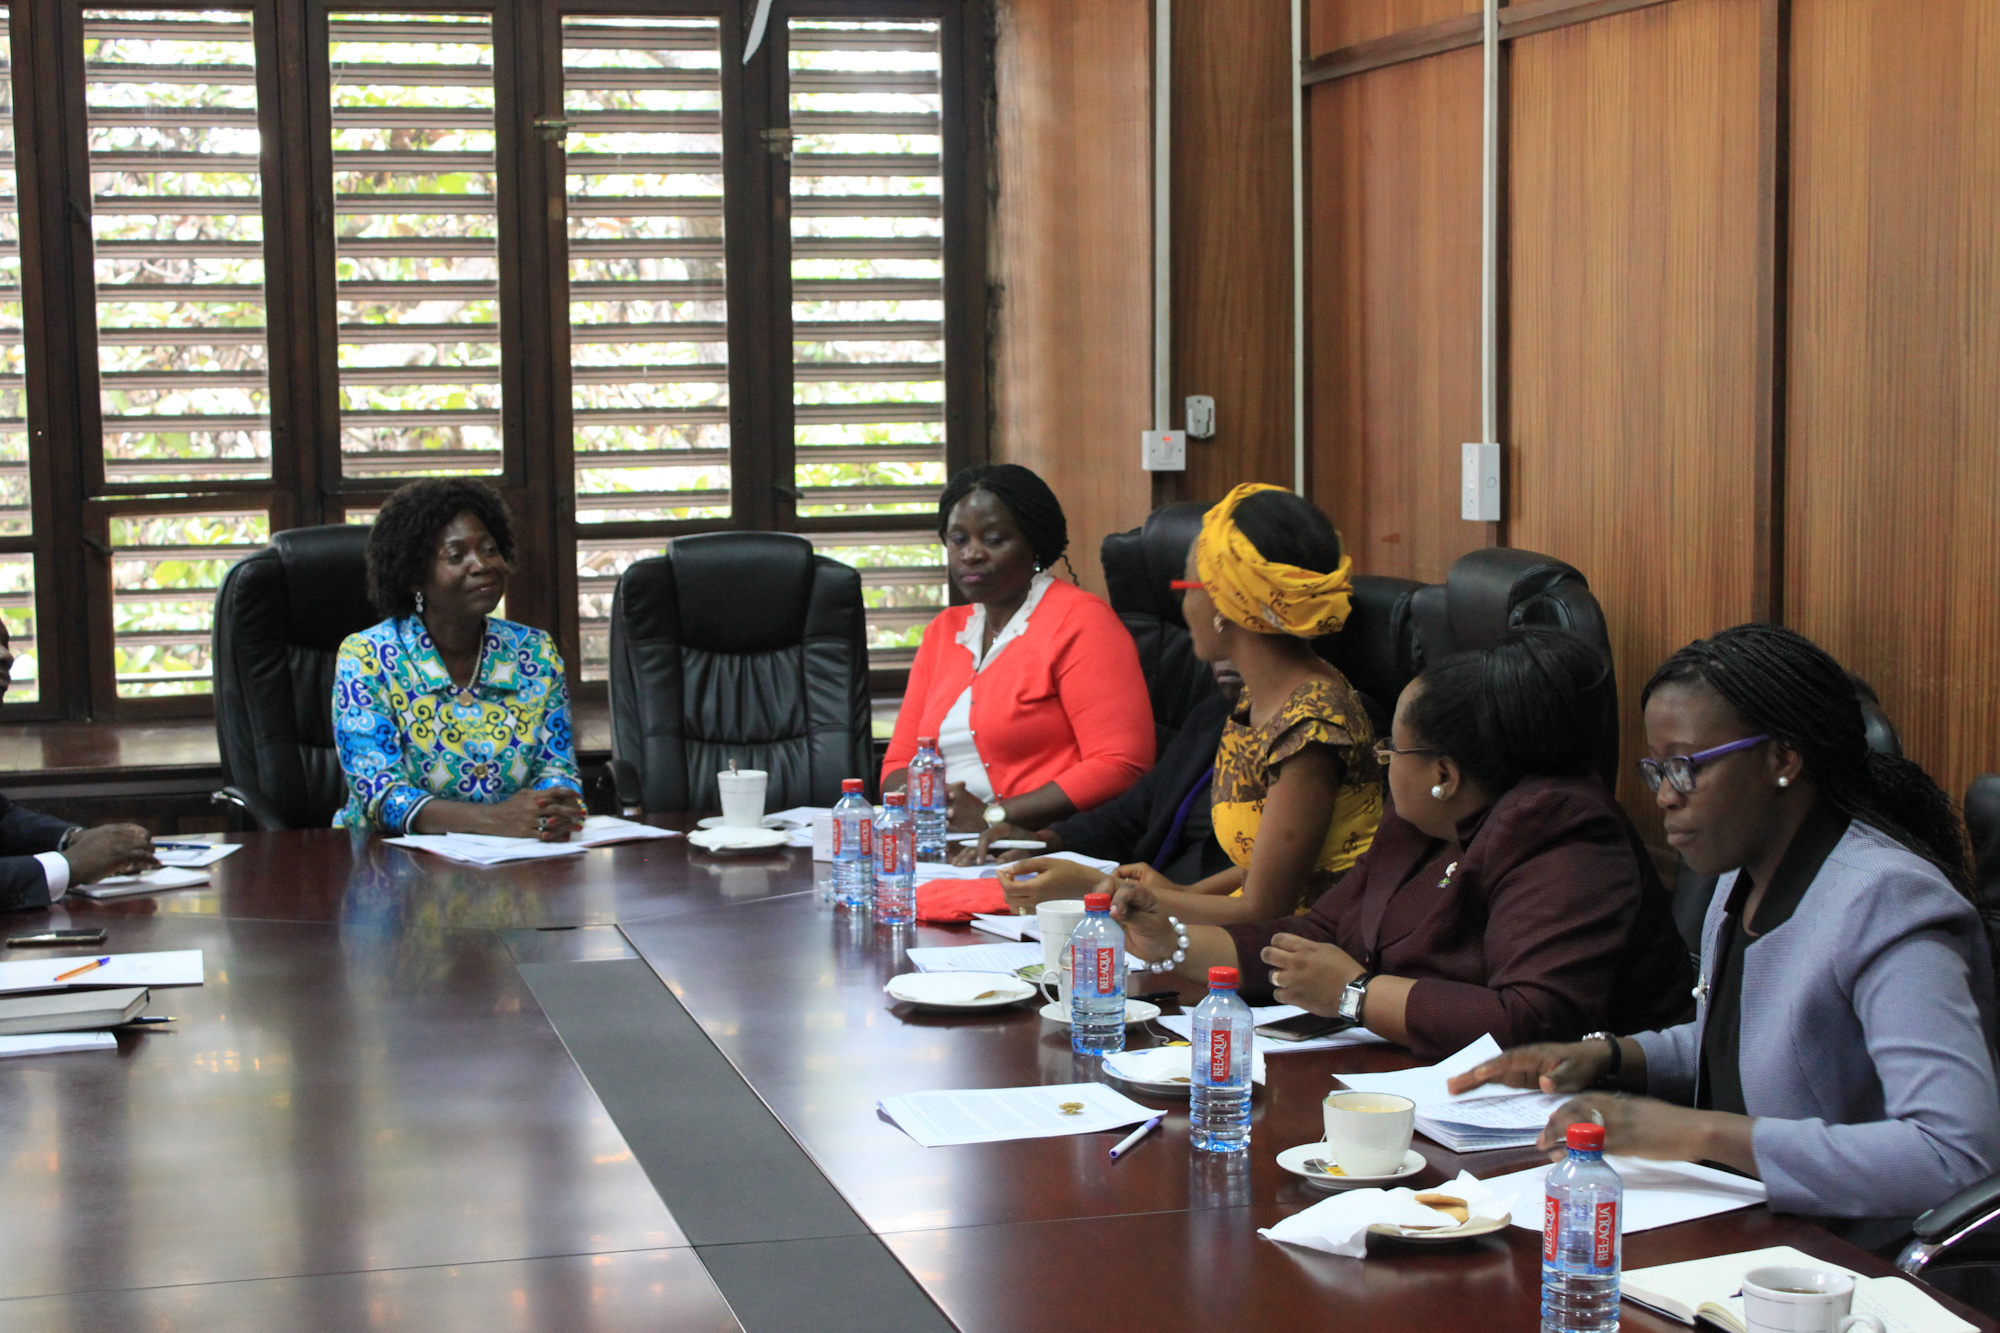 IRI Ghana - Women in Meeting